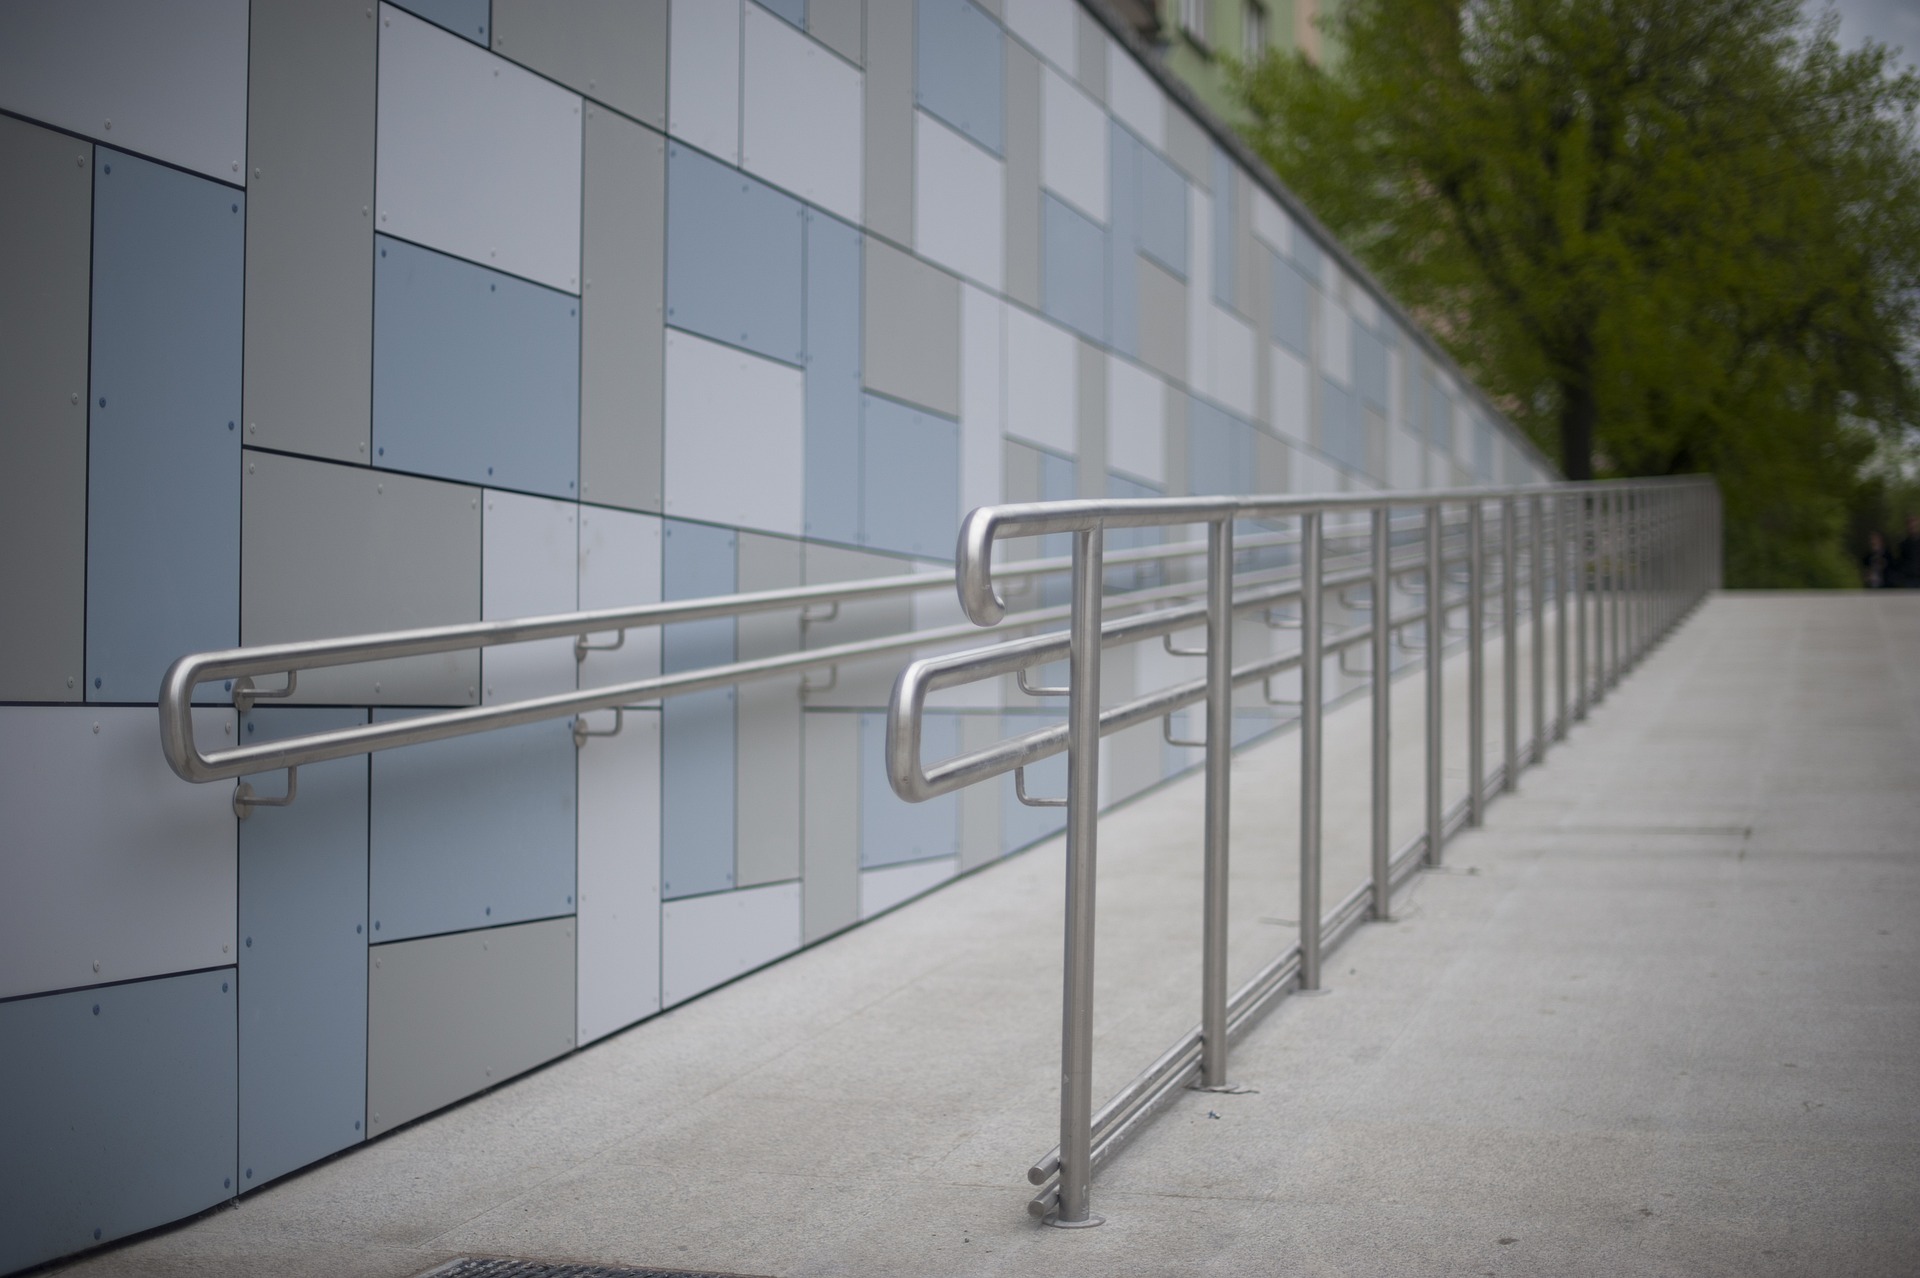 Wheelchair ramp with guardrails